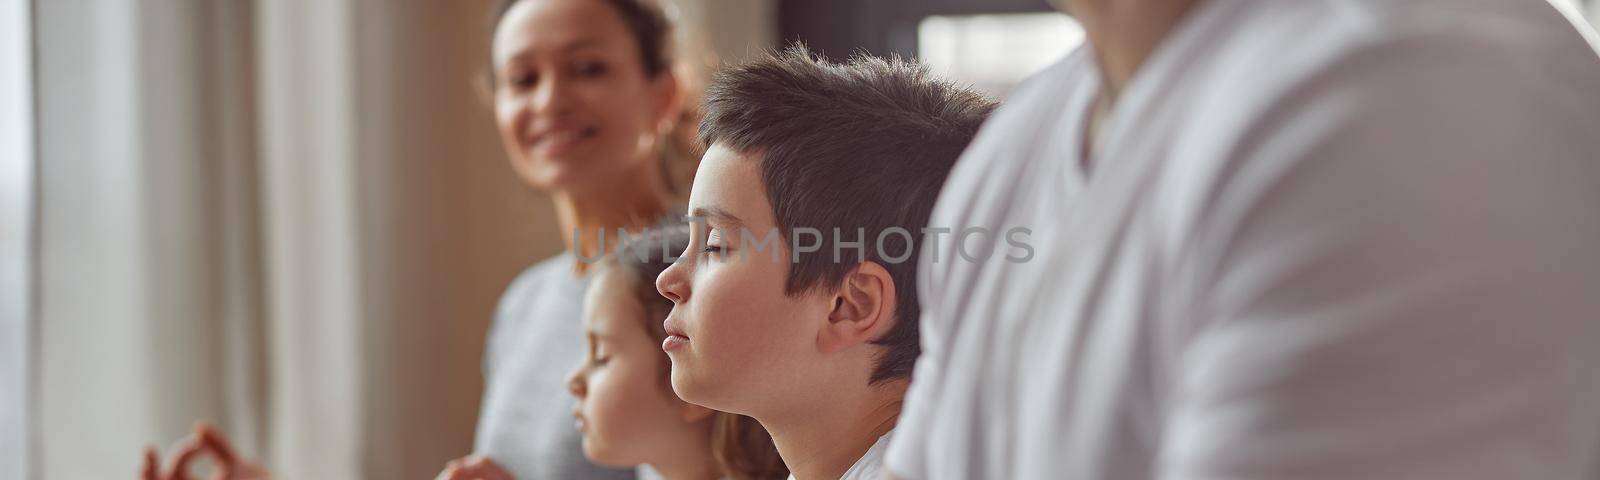 Calm little boy enjoying meditation with family indoors by Yaroslav_astakhov